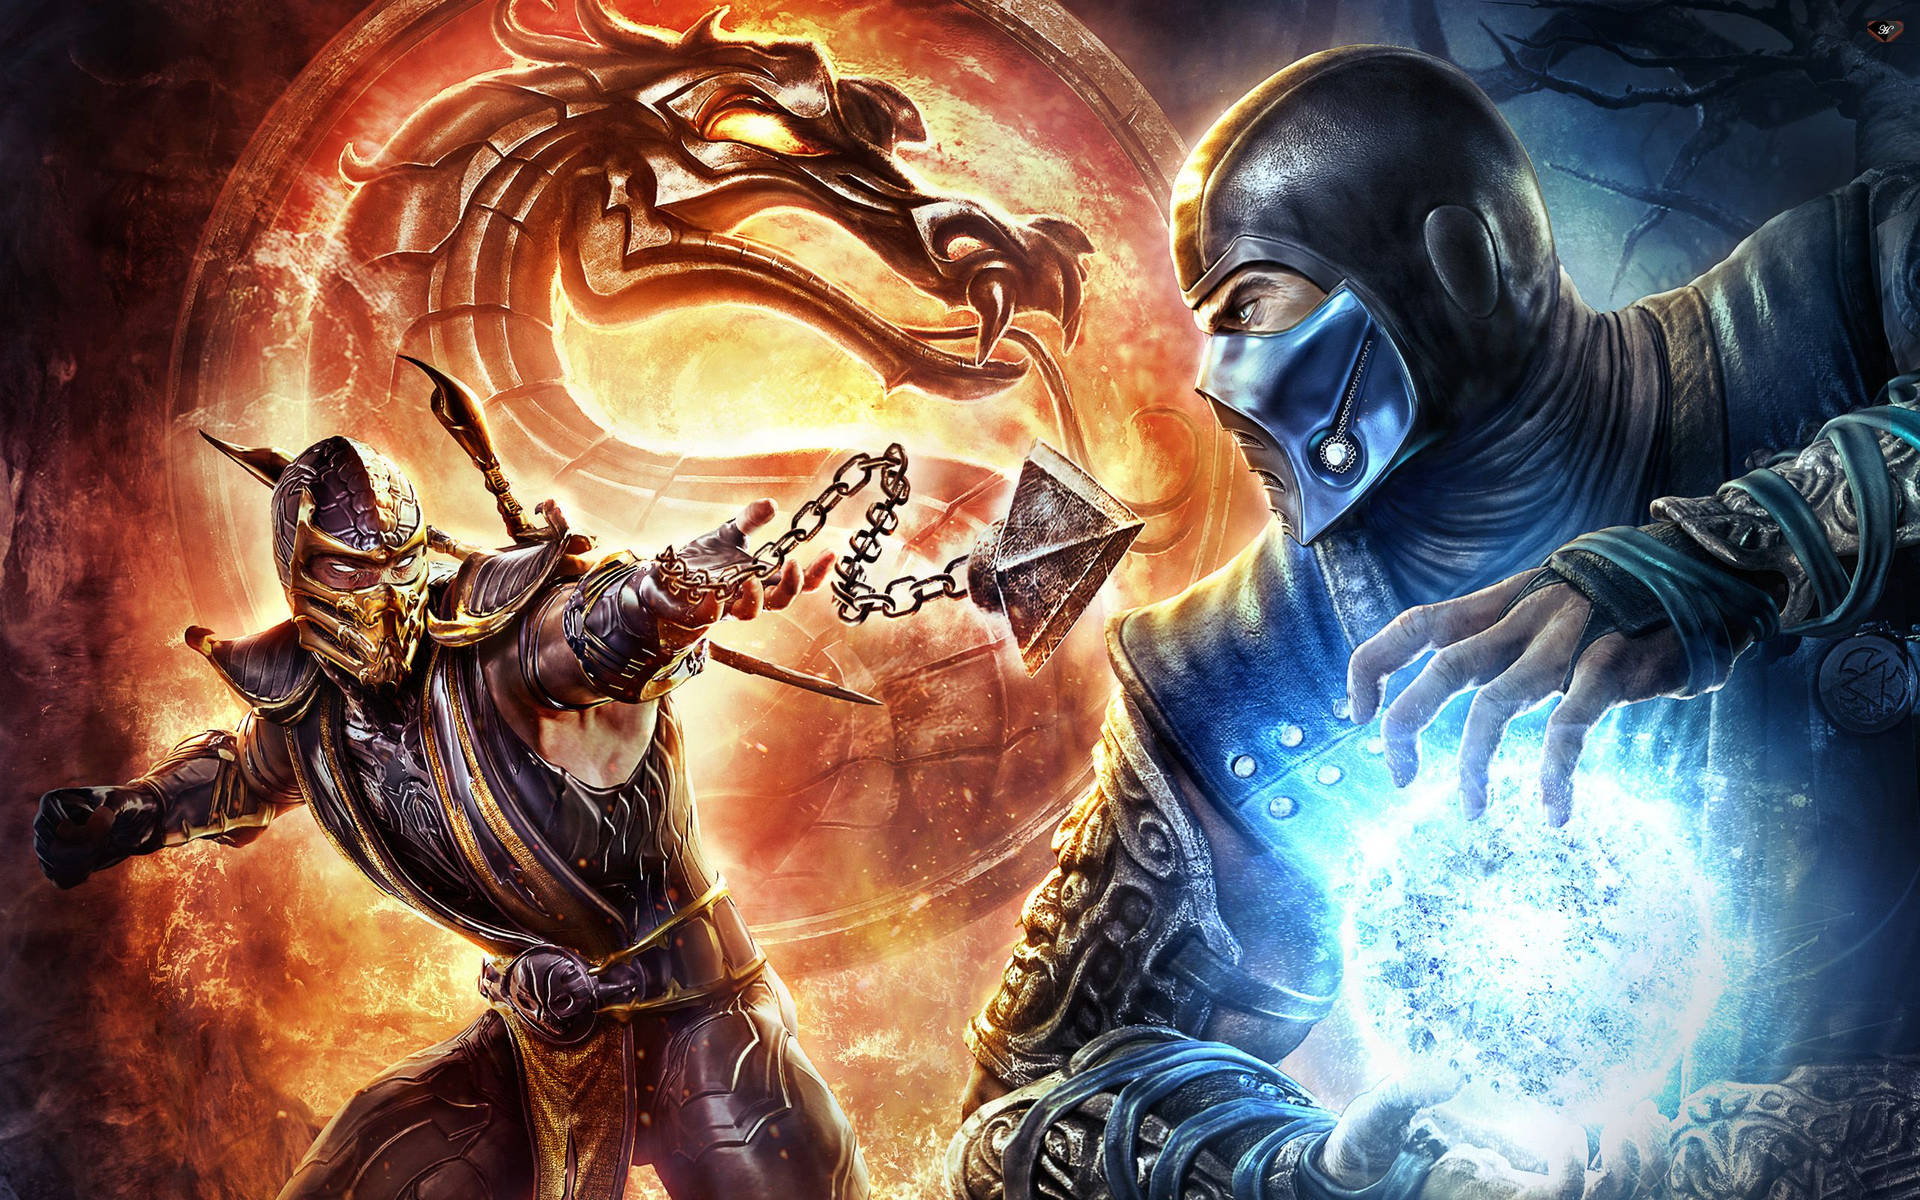 The Epic Rivalry of Mortal Kombat Wallpaper